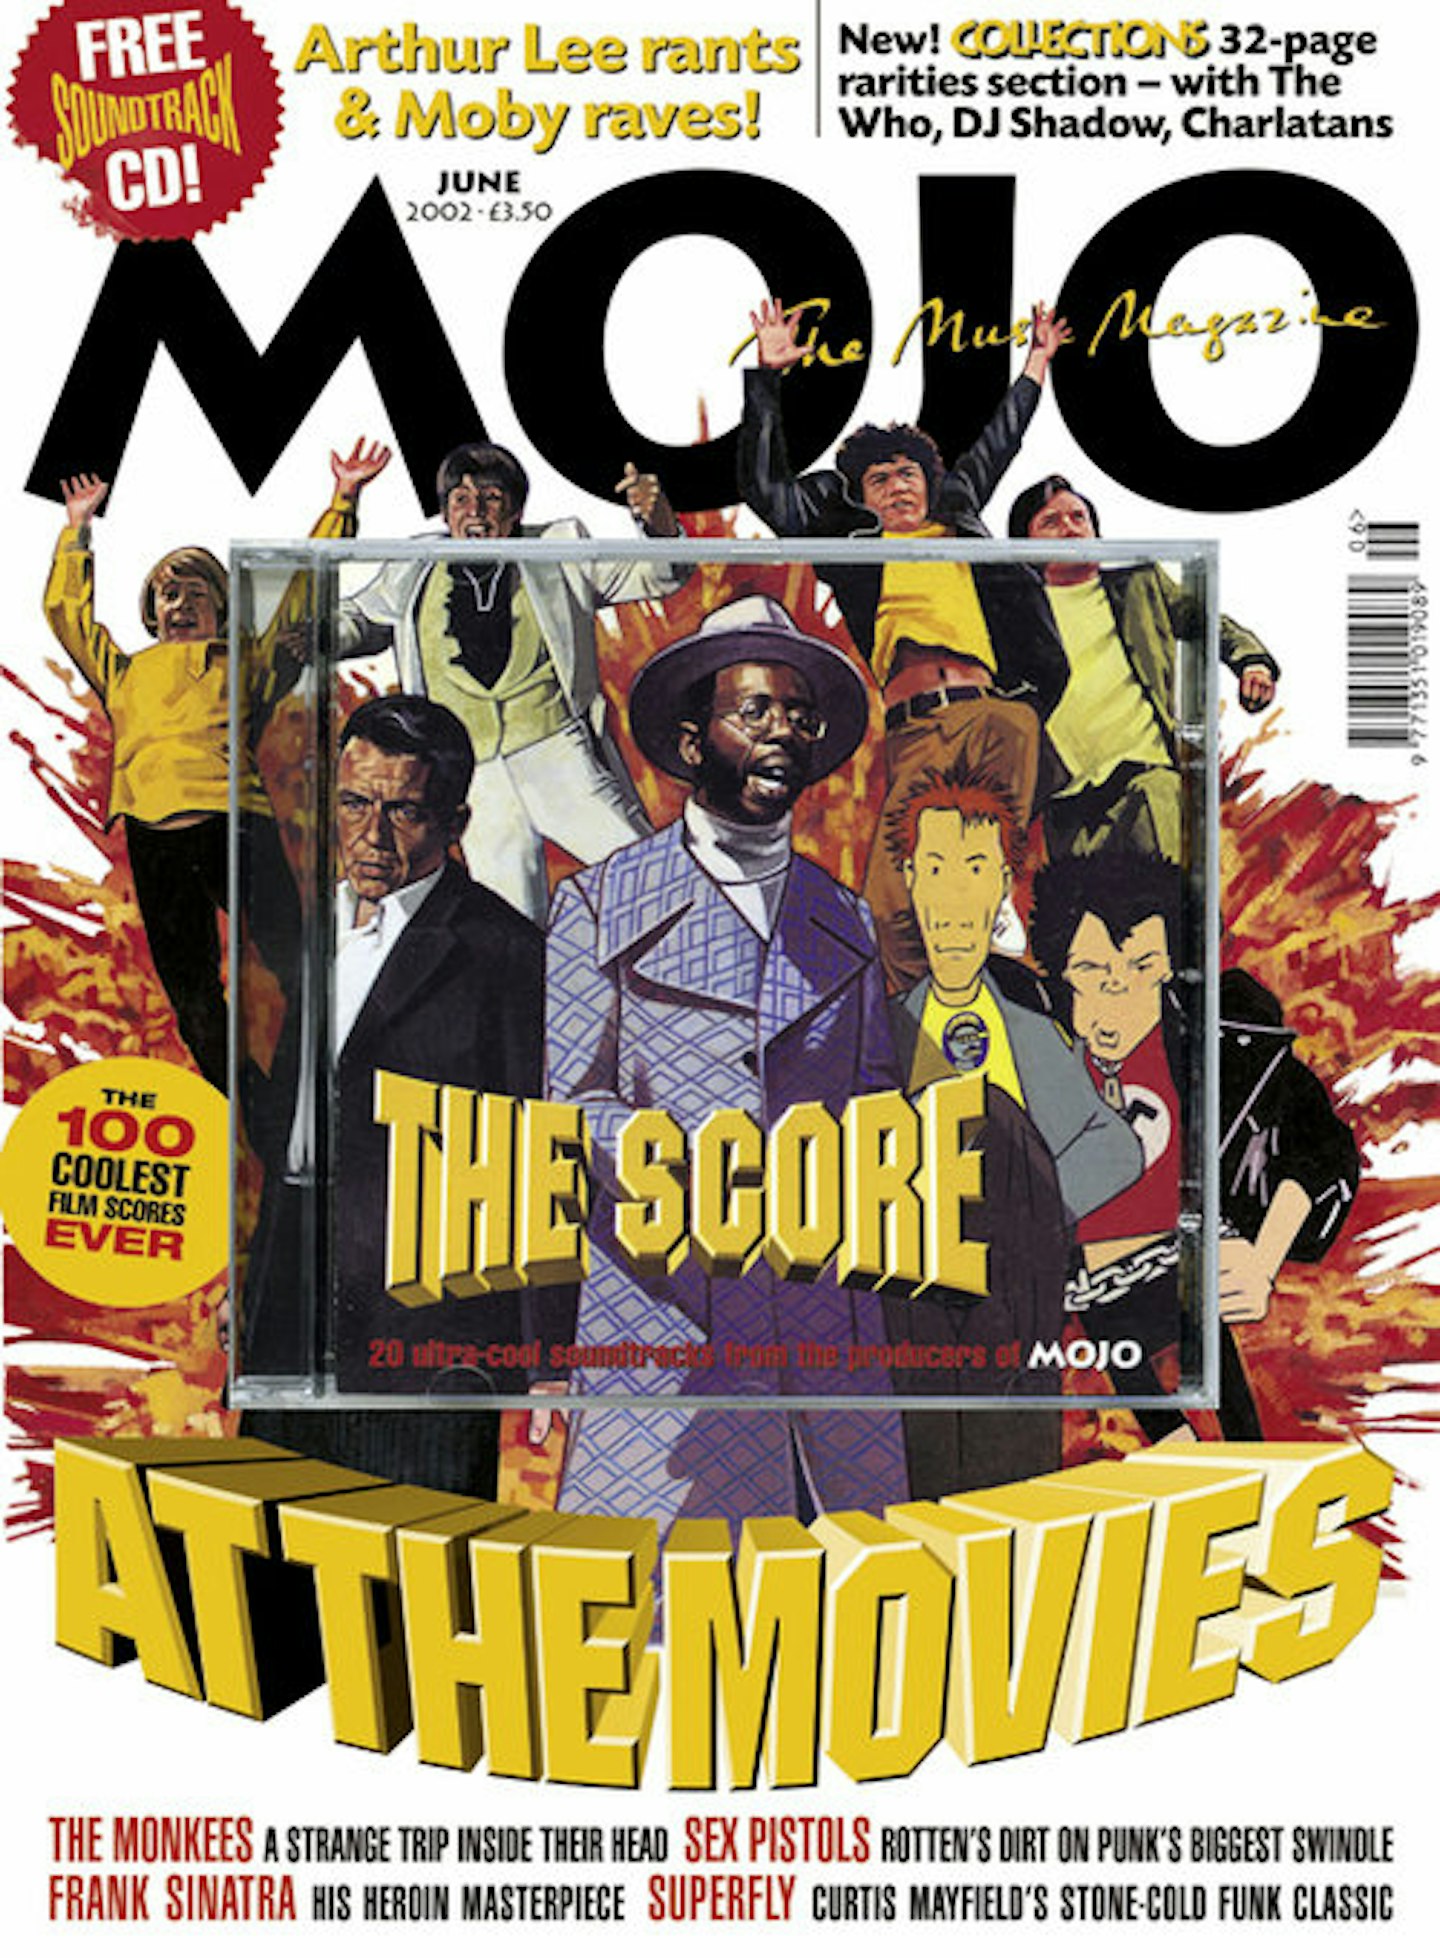 MOJO Issue 103 / June 2002